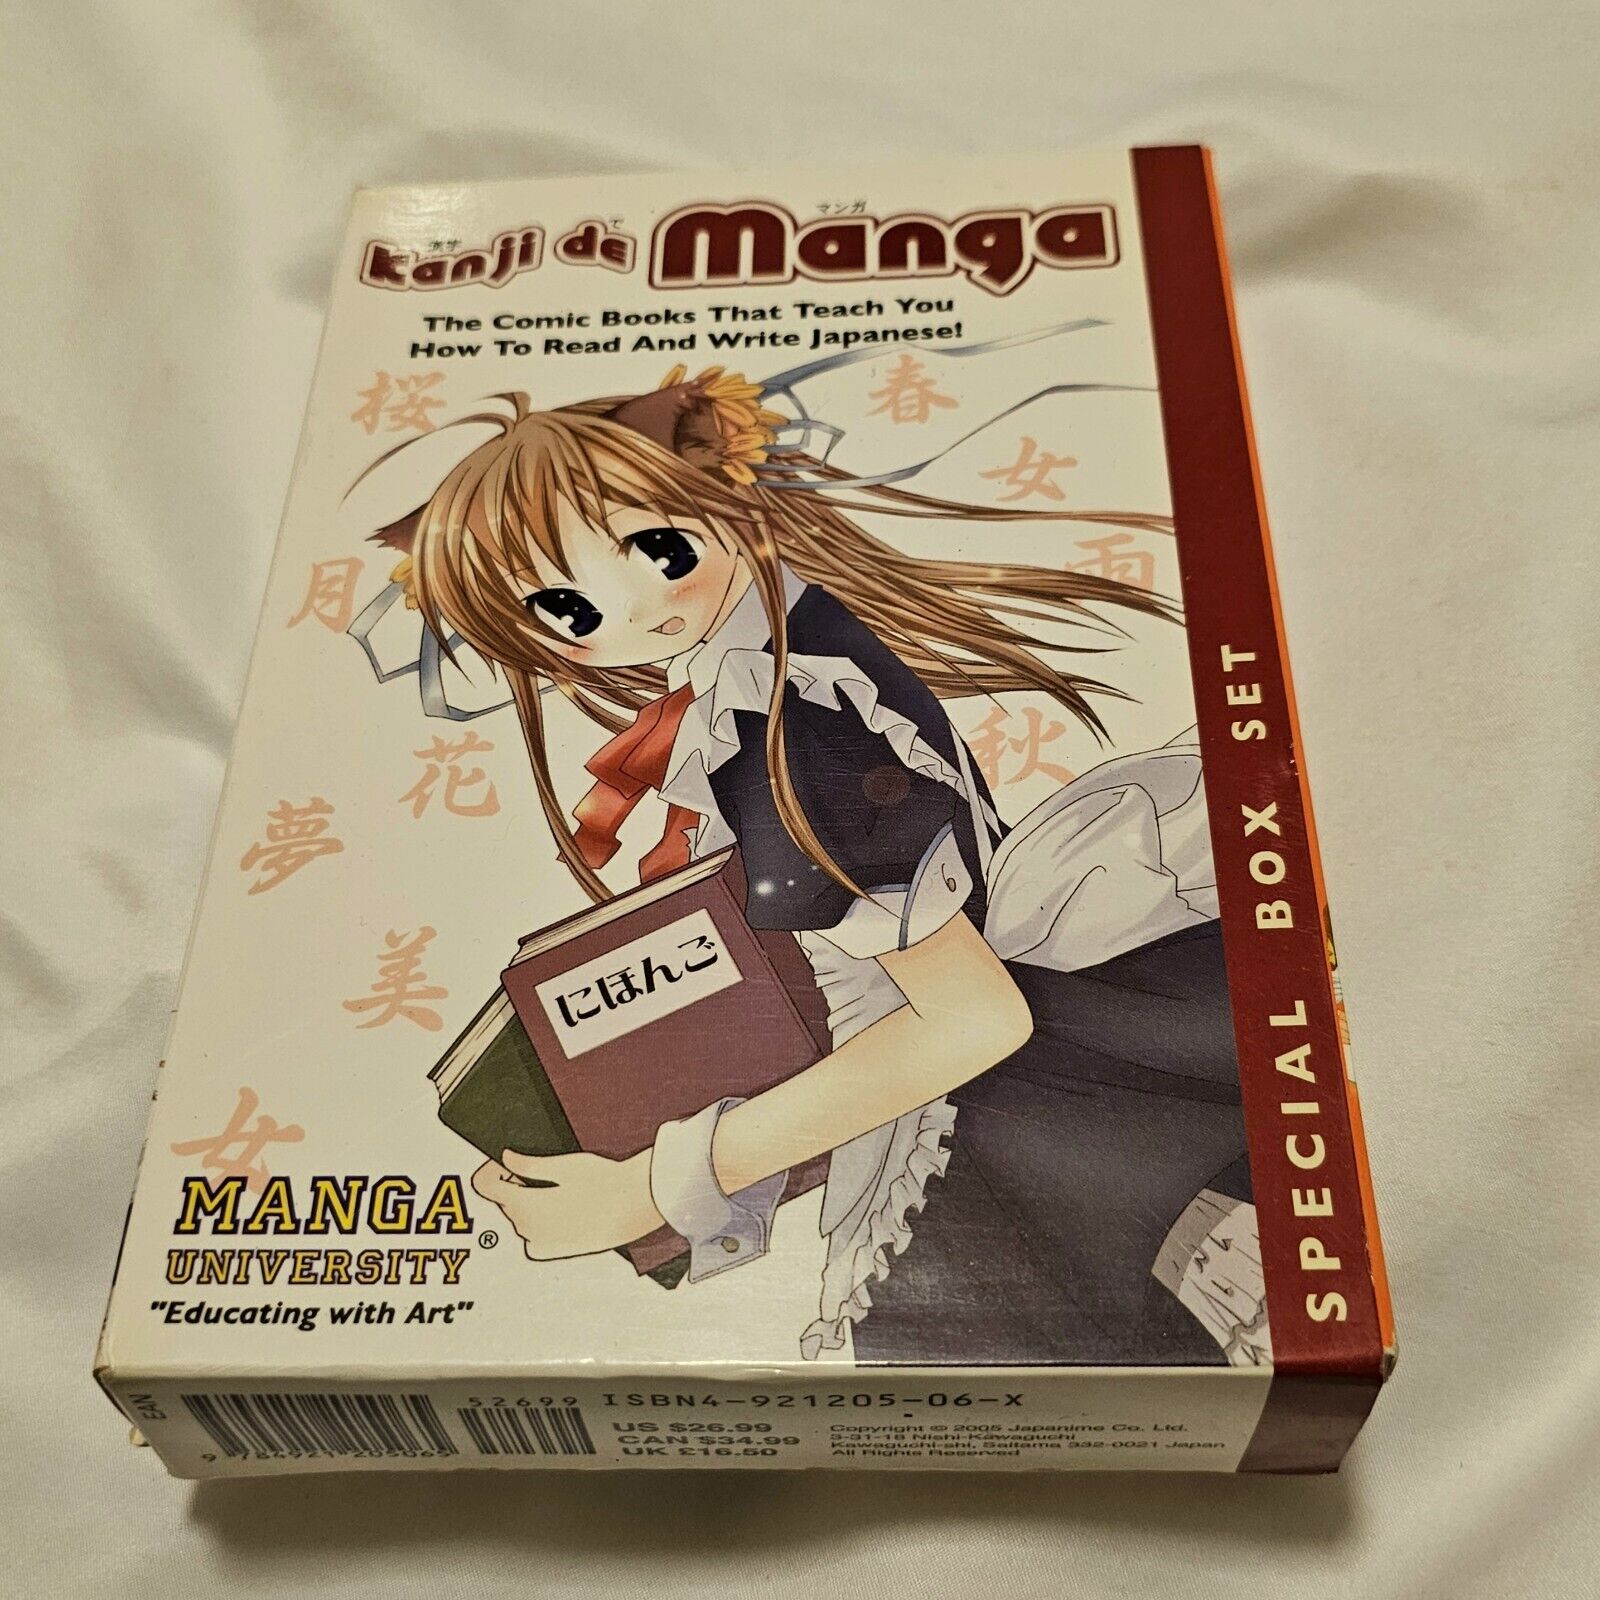 Kanji De Manga Comics Special Box Set Read Write Learn Japanese. Slipcover Flaws